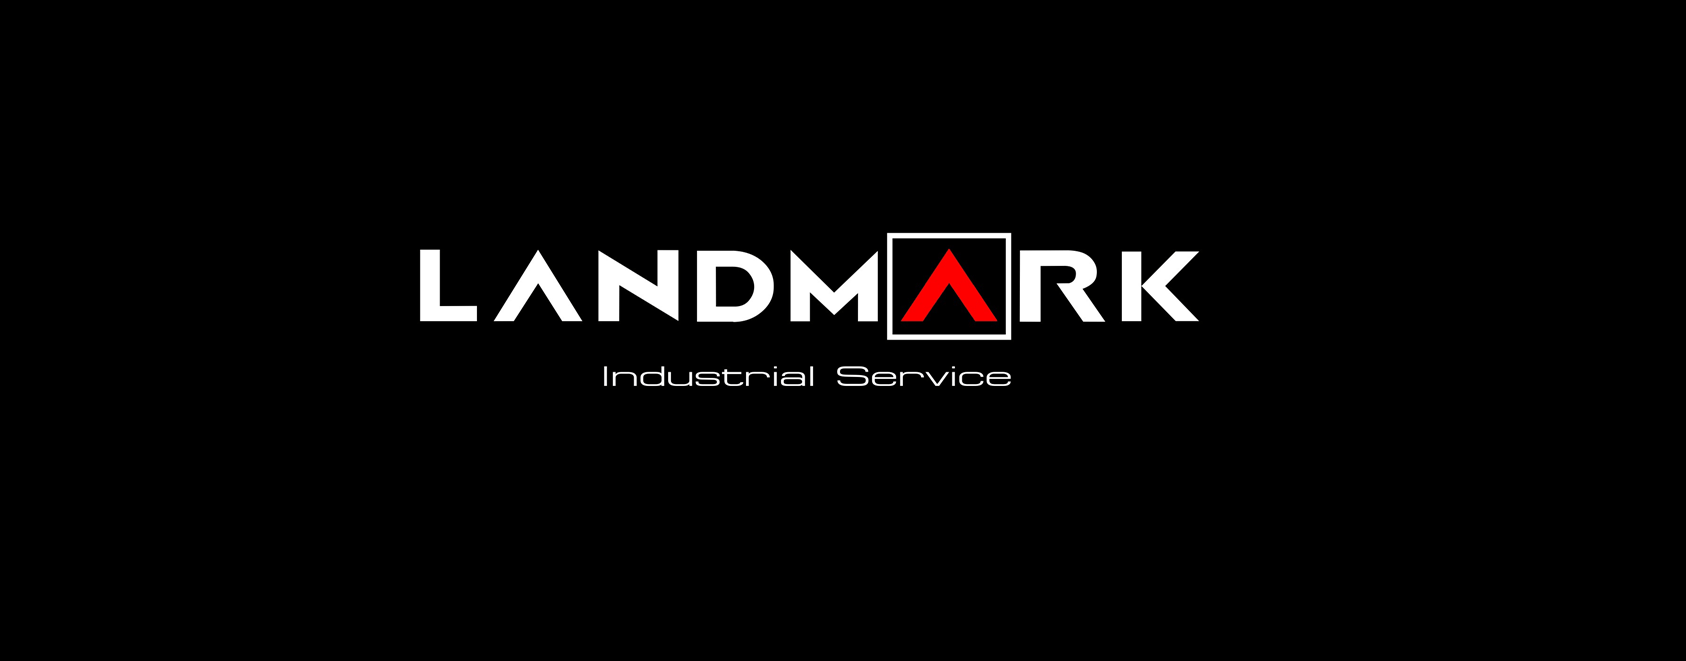 Landmark Logo - Landmark Industrial Service | Idaho Industrial Automation Control